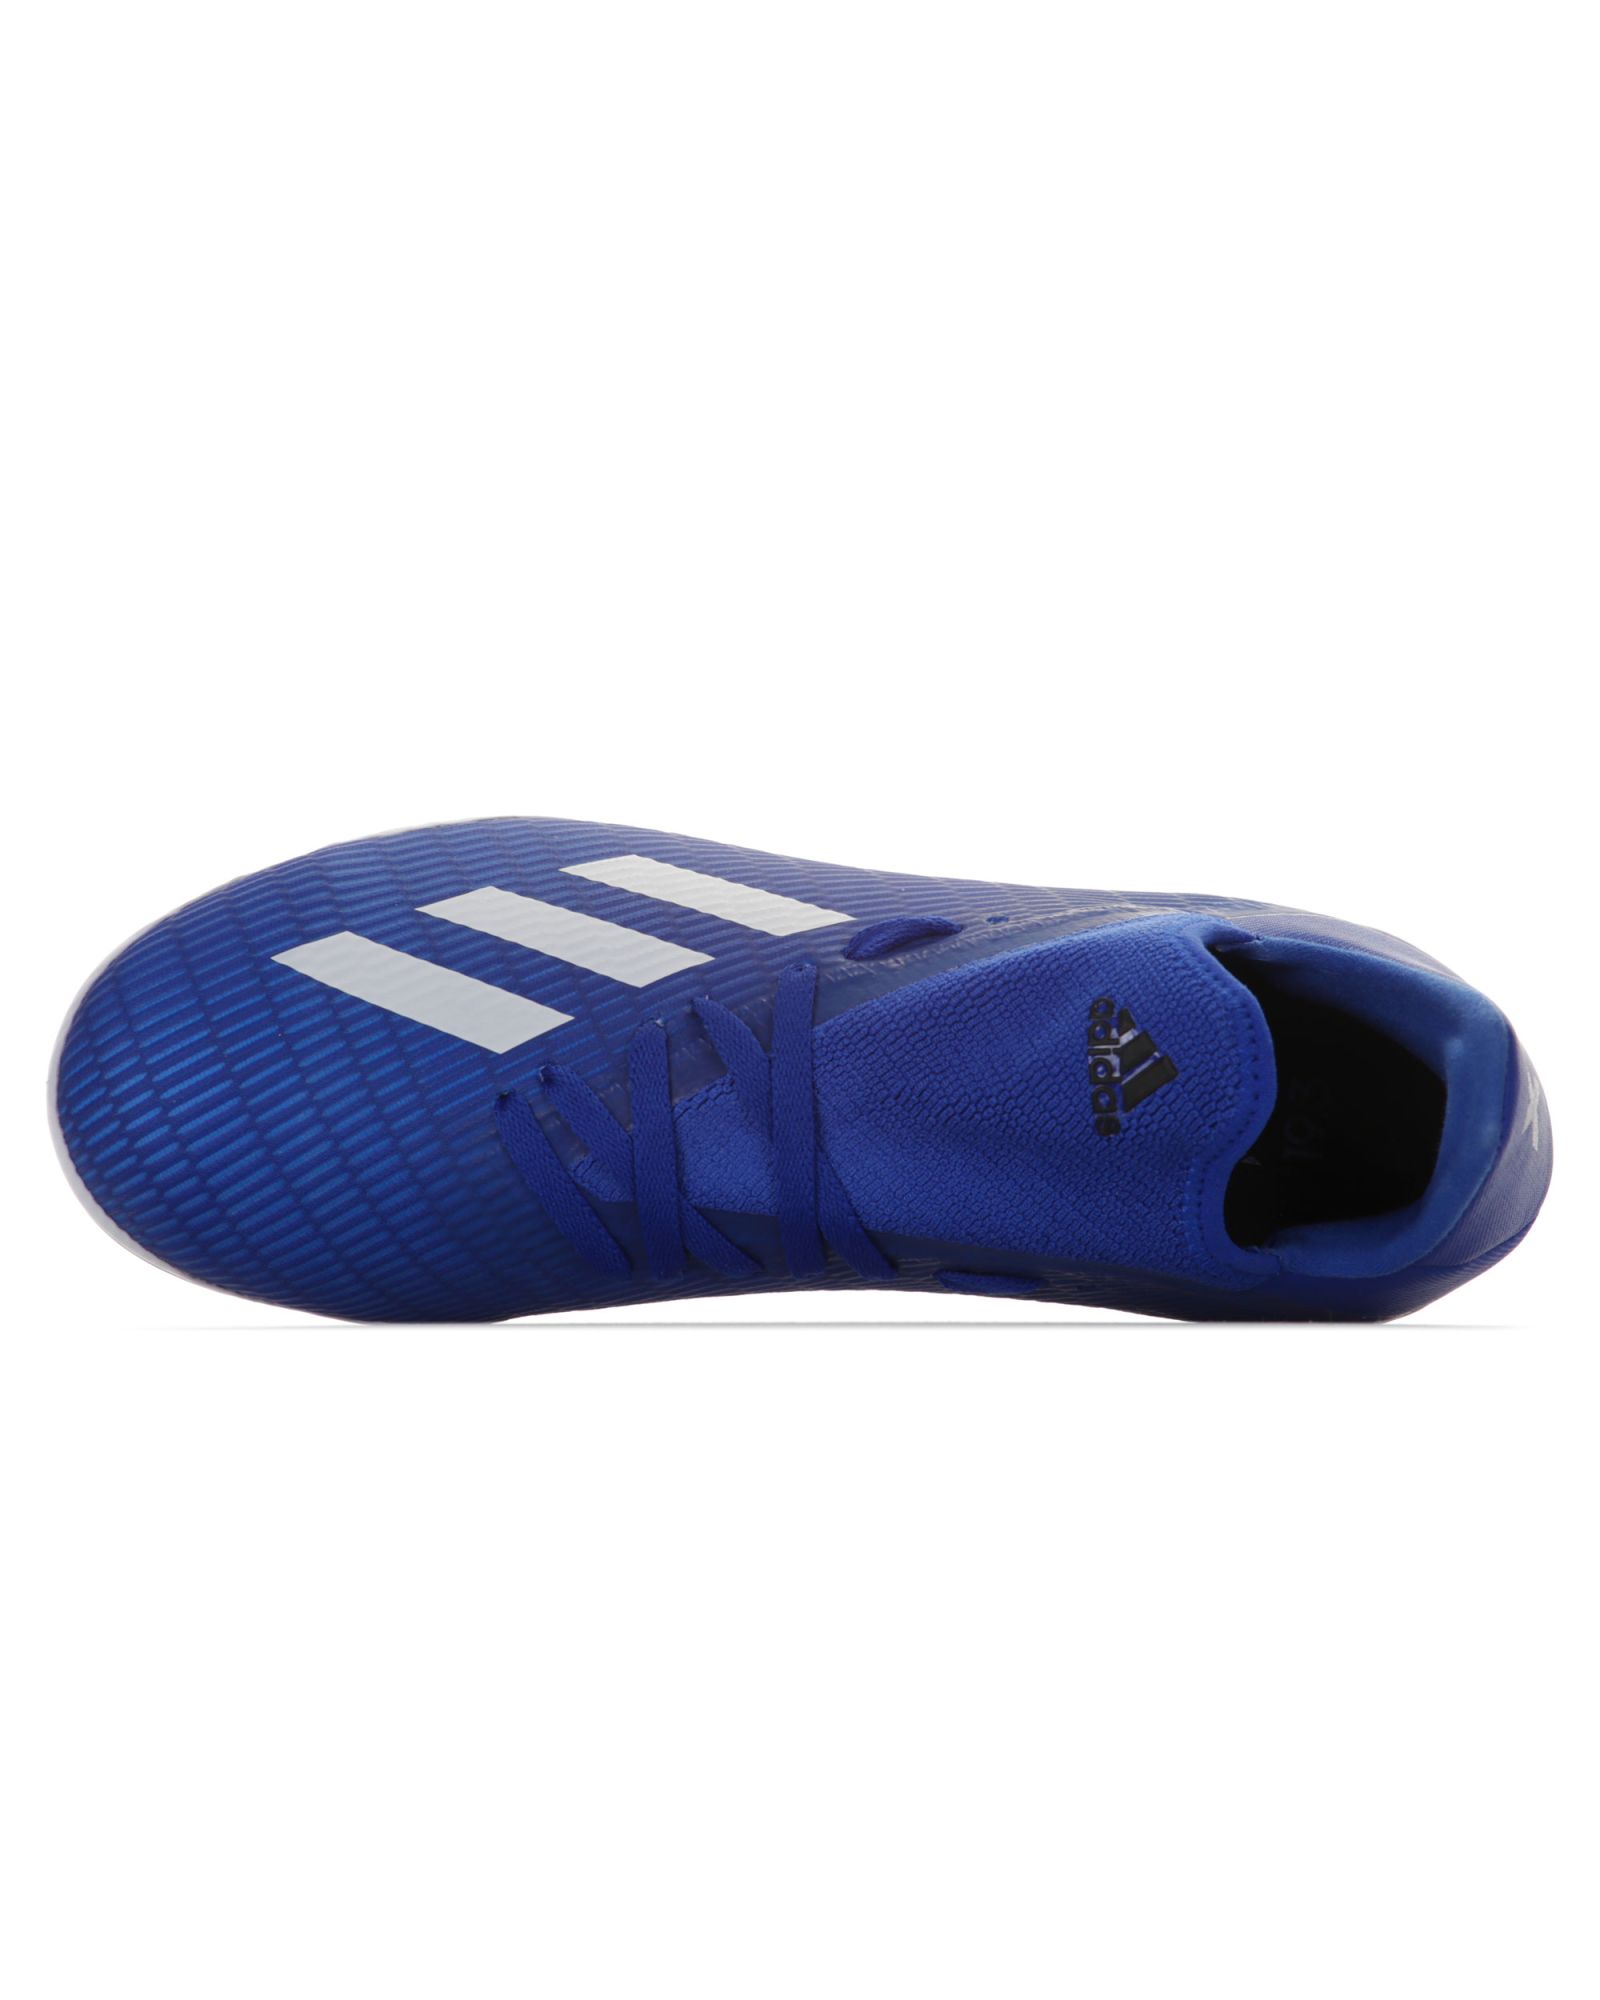 Botas de fútbol adidas X 19.3 MG Junior Azul - Fútbol Factory